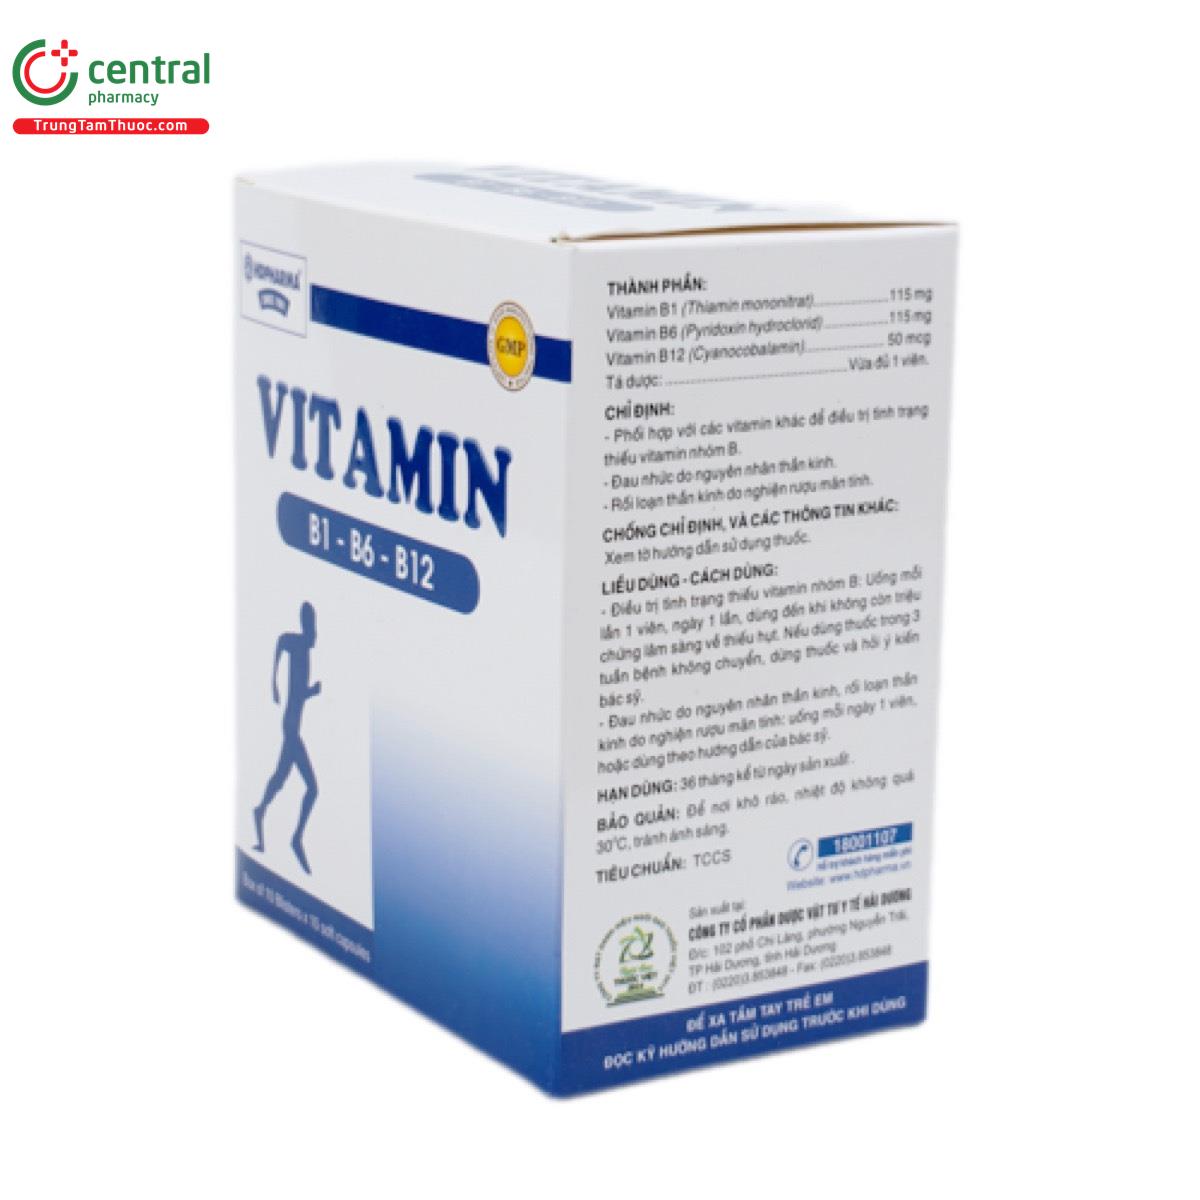 vitamin b1 b6 b12 hd pharma 5 D1355